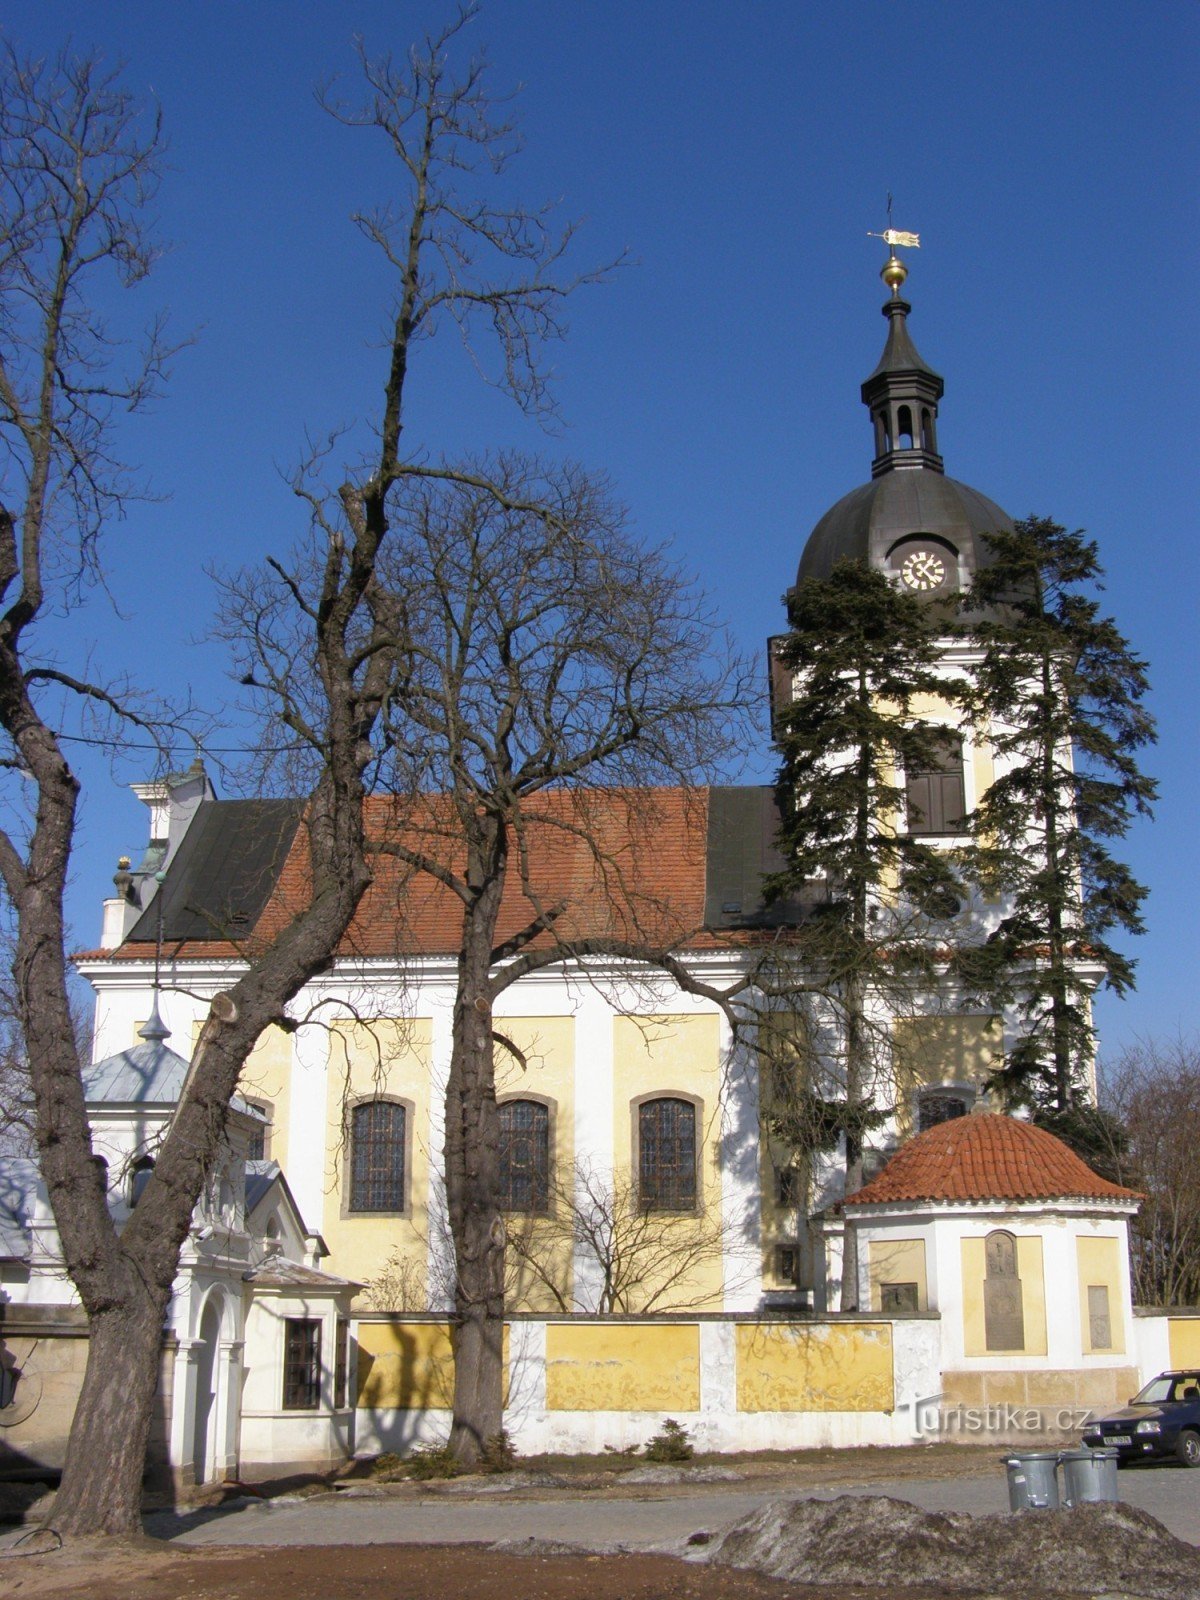 Dobřenice - Szent Kliment templom